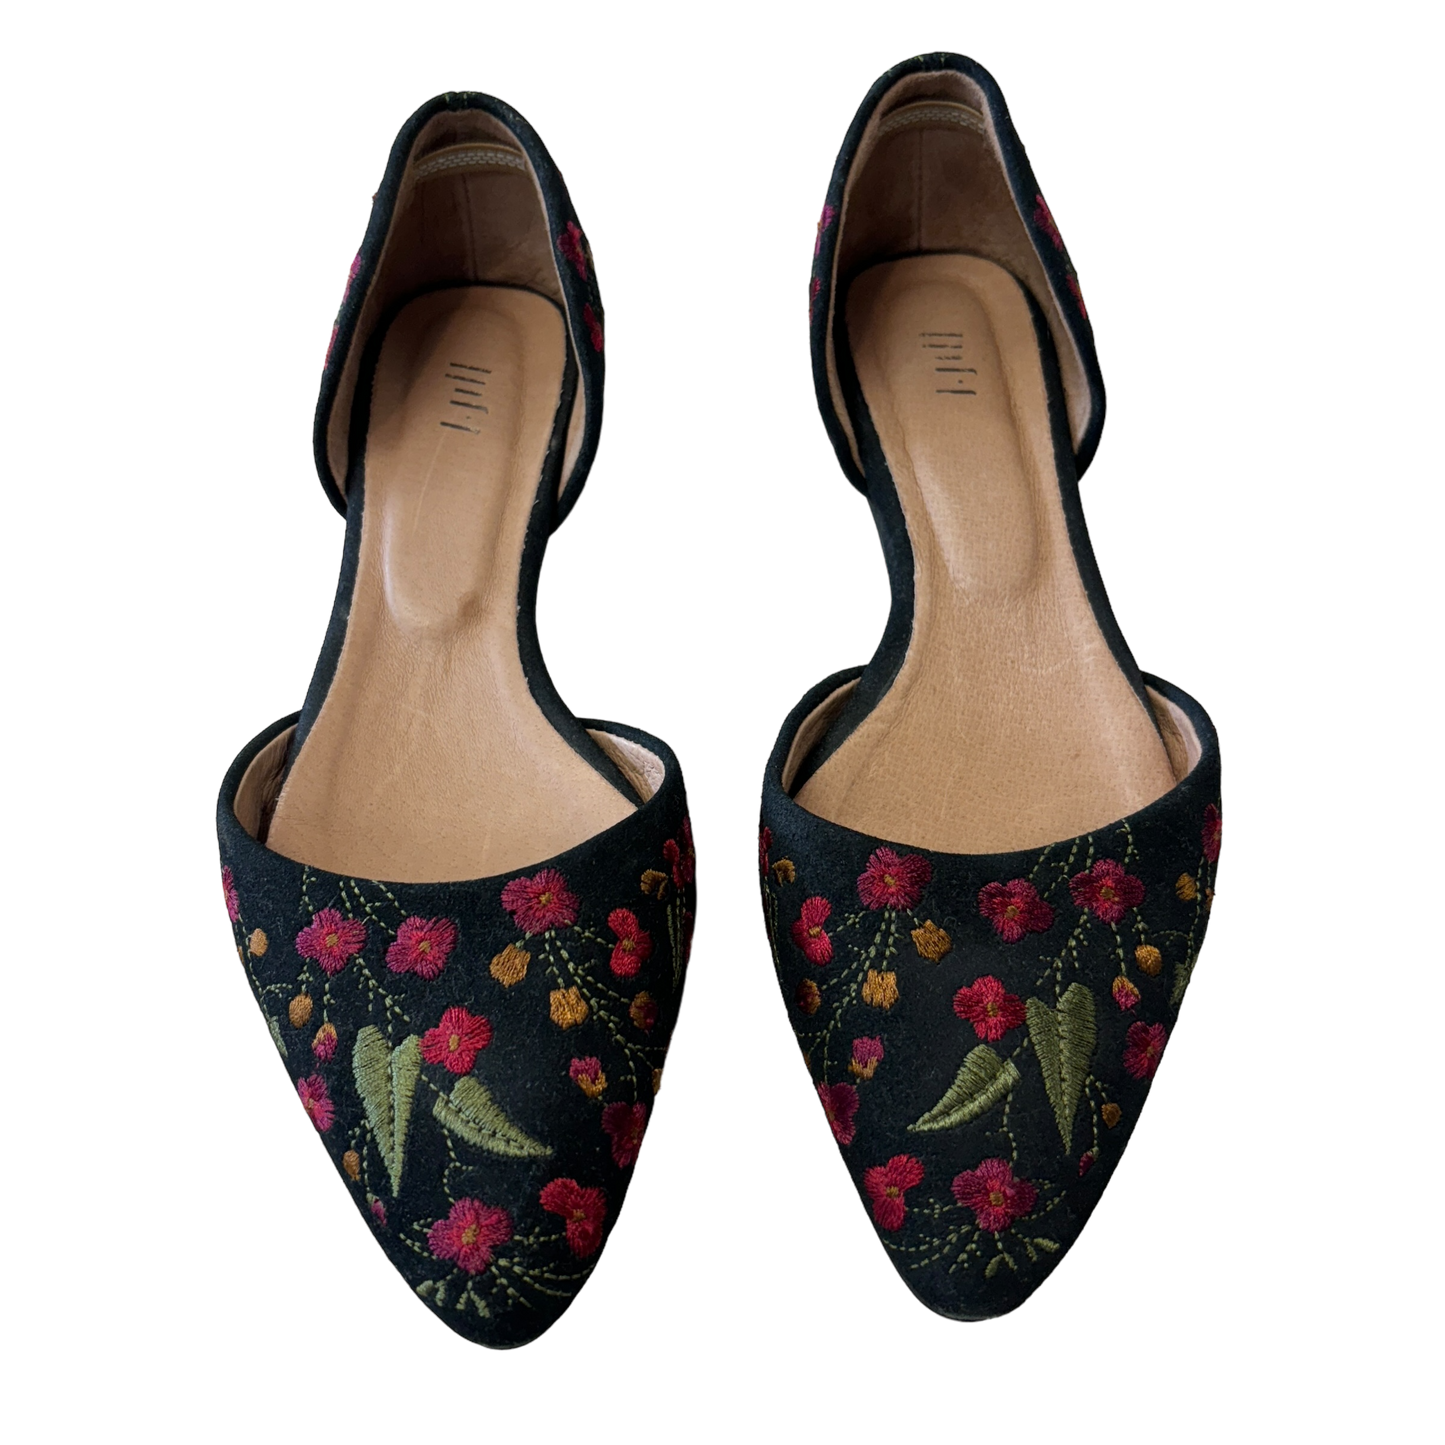 Floral Print Shoes Flats J. Jill, Size 6.5